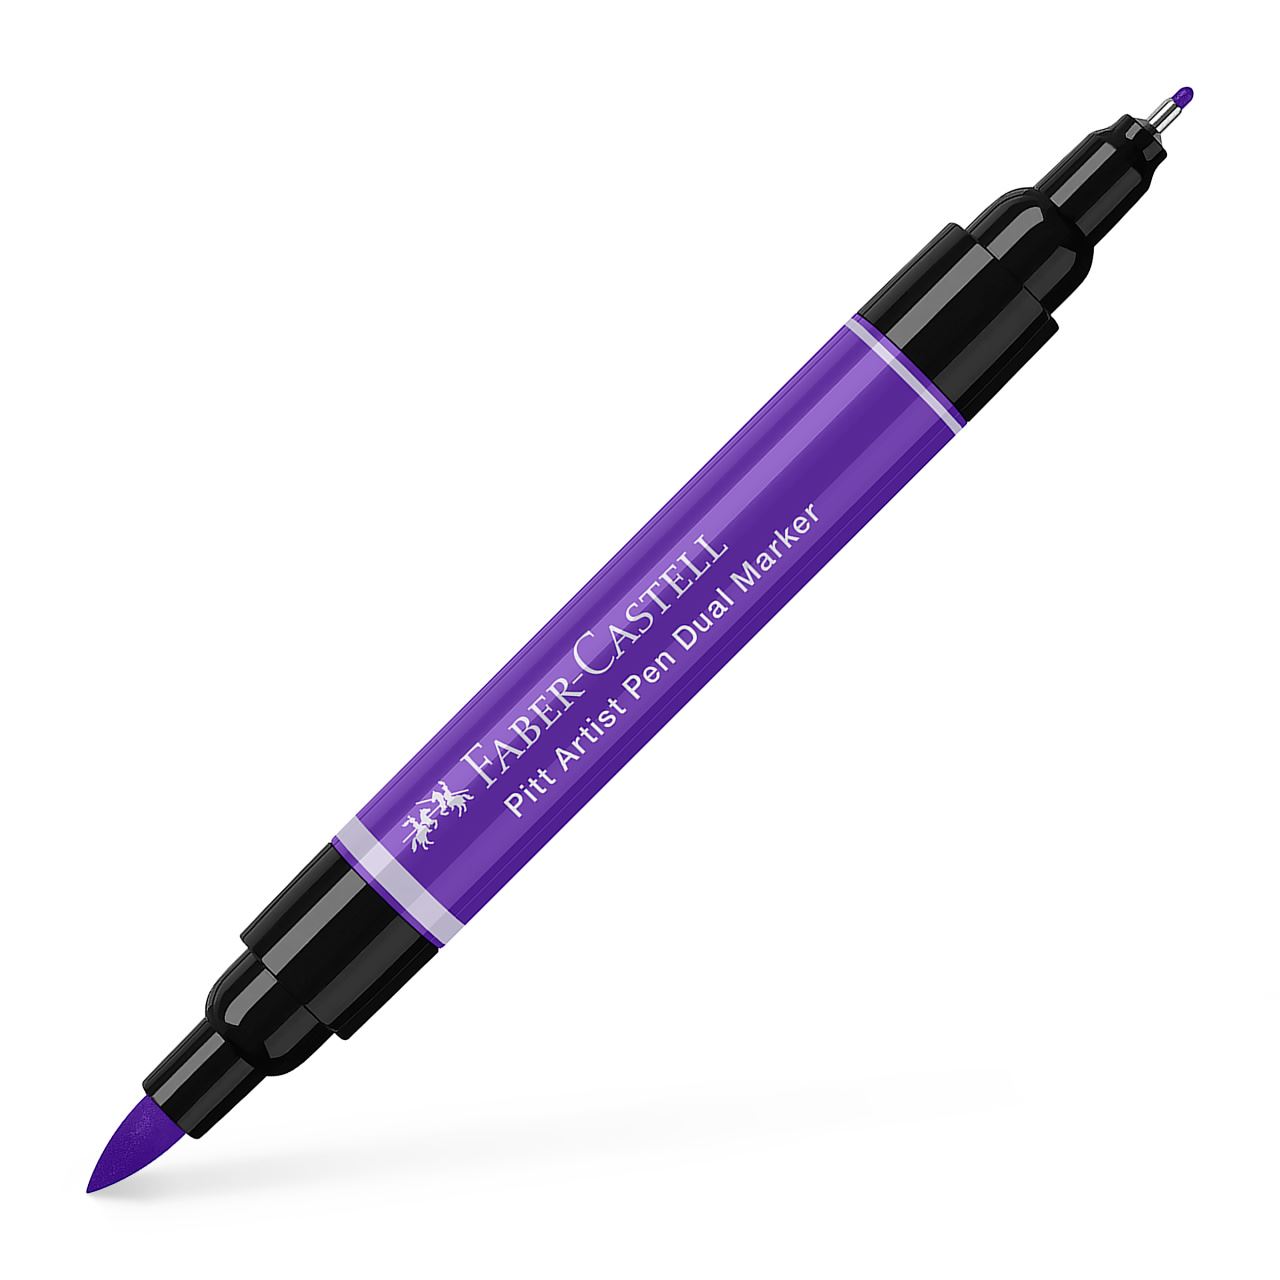 Faber-Castell - Pitt Artist Pen Dual Marker, violeta púrpura